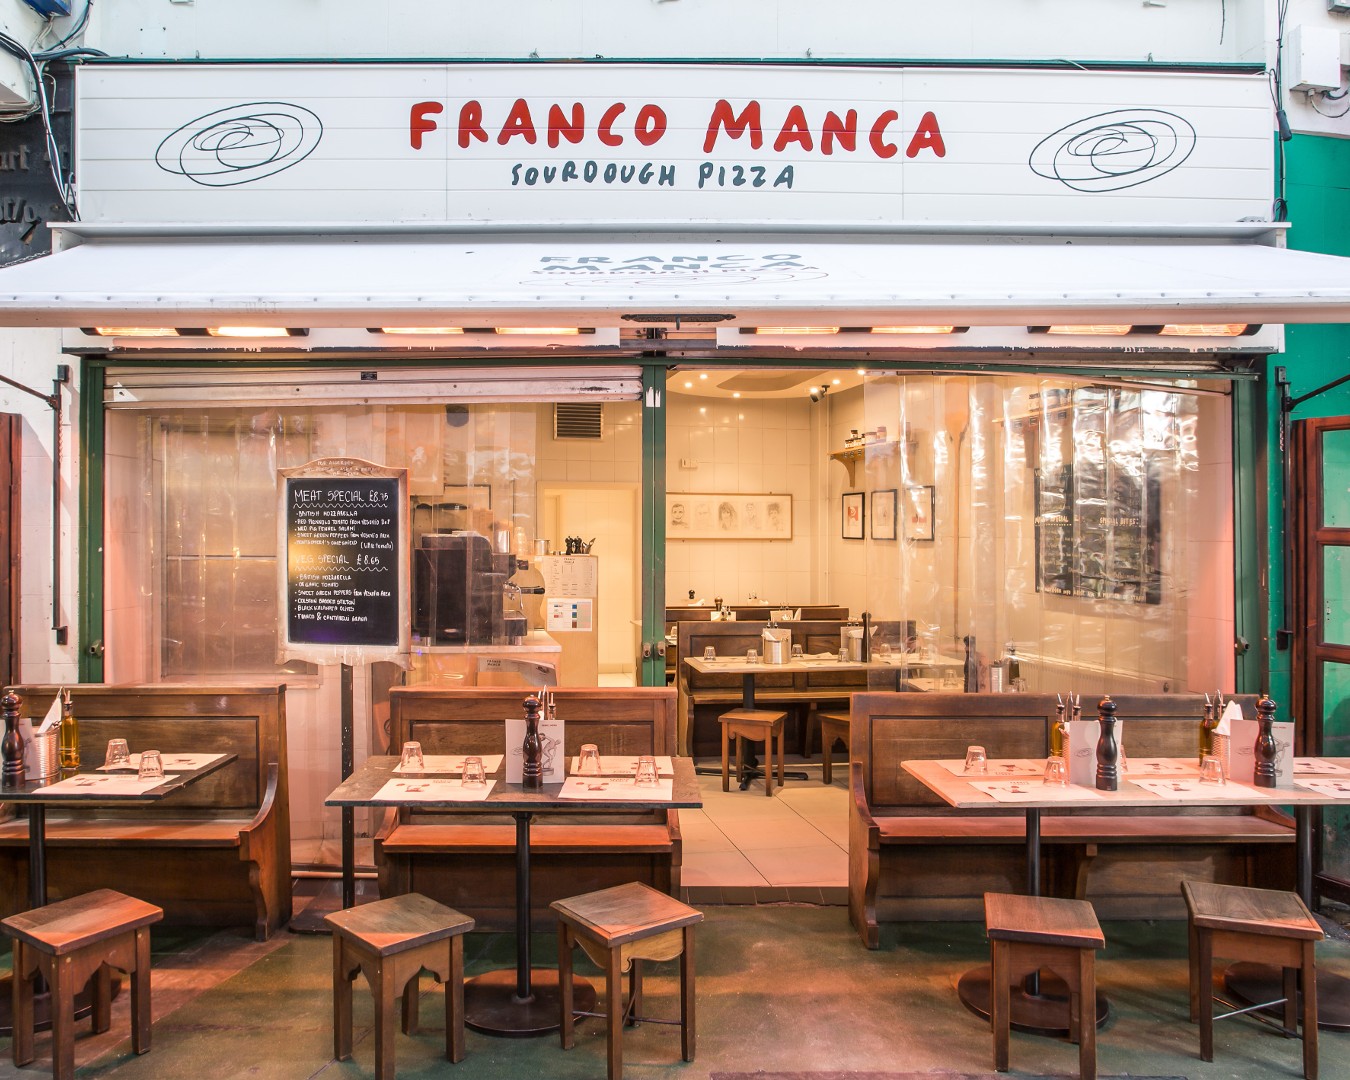 Brixton Franco Manca pizzeria